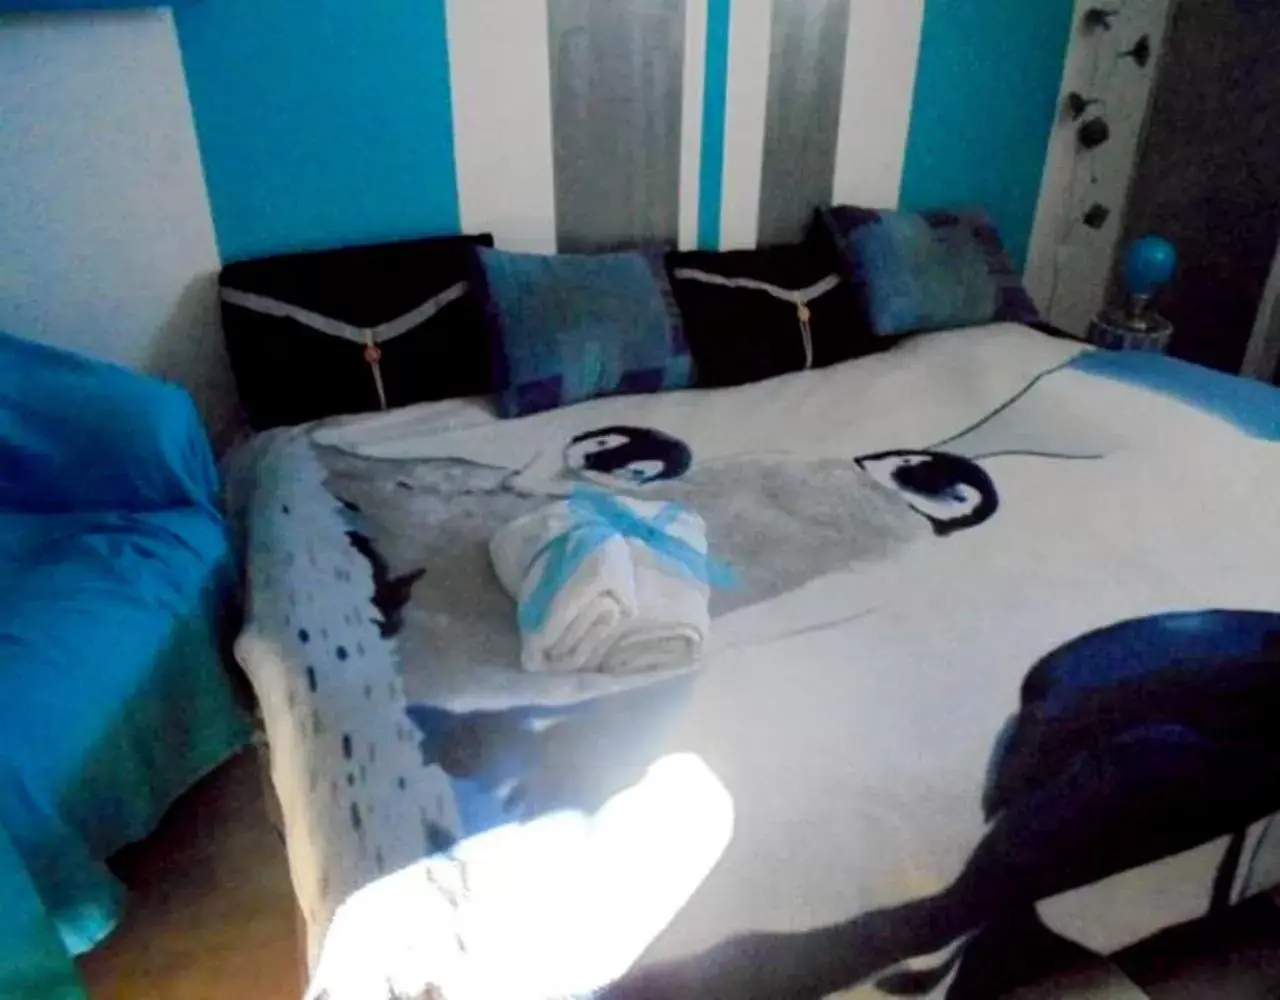 Bed in blue room, spa, kitchenette